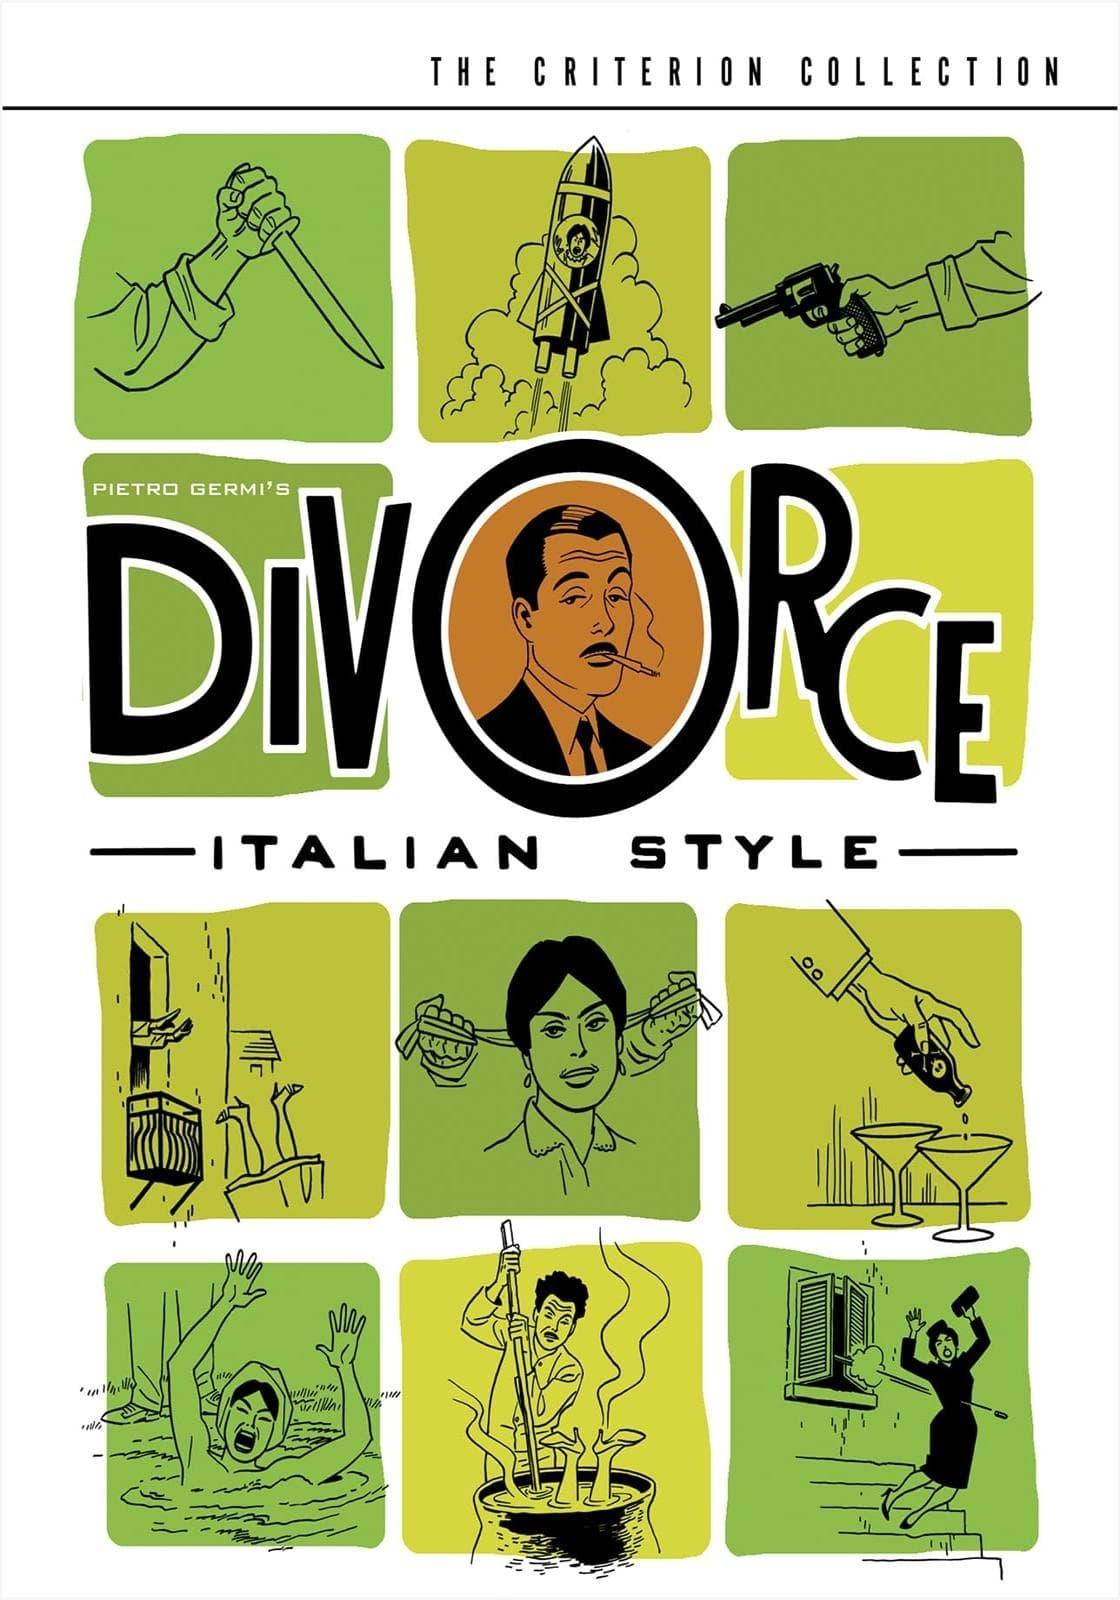 Divorce Italian Style poster